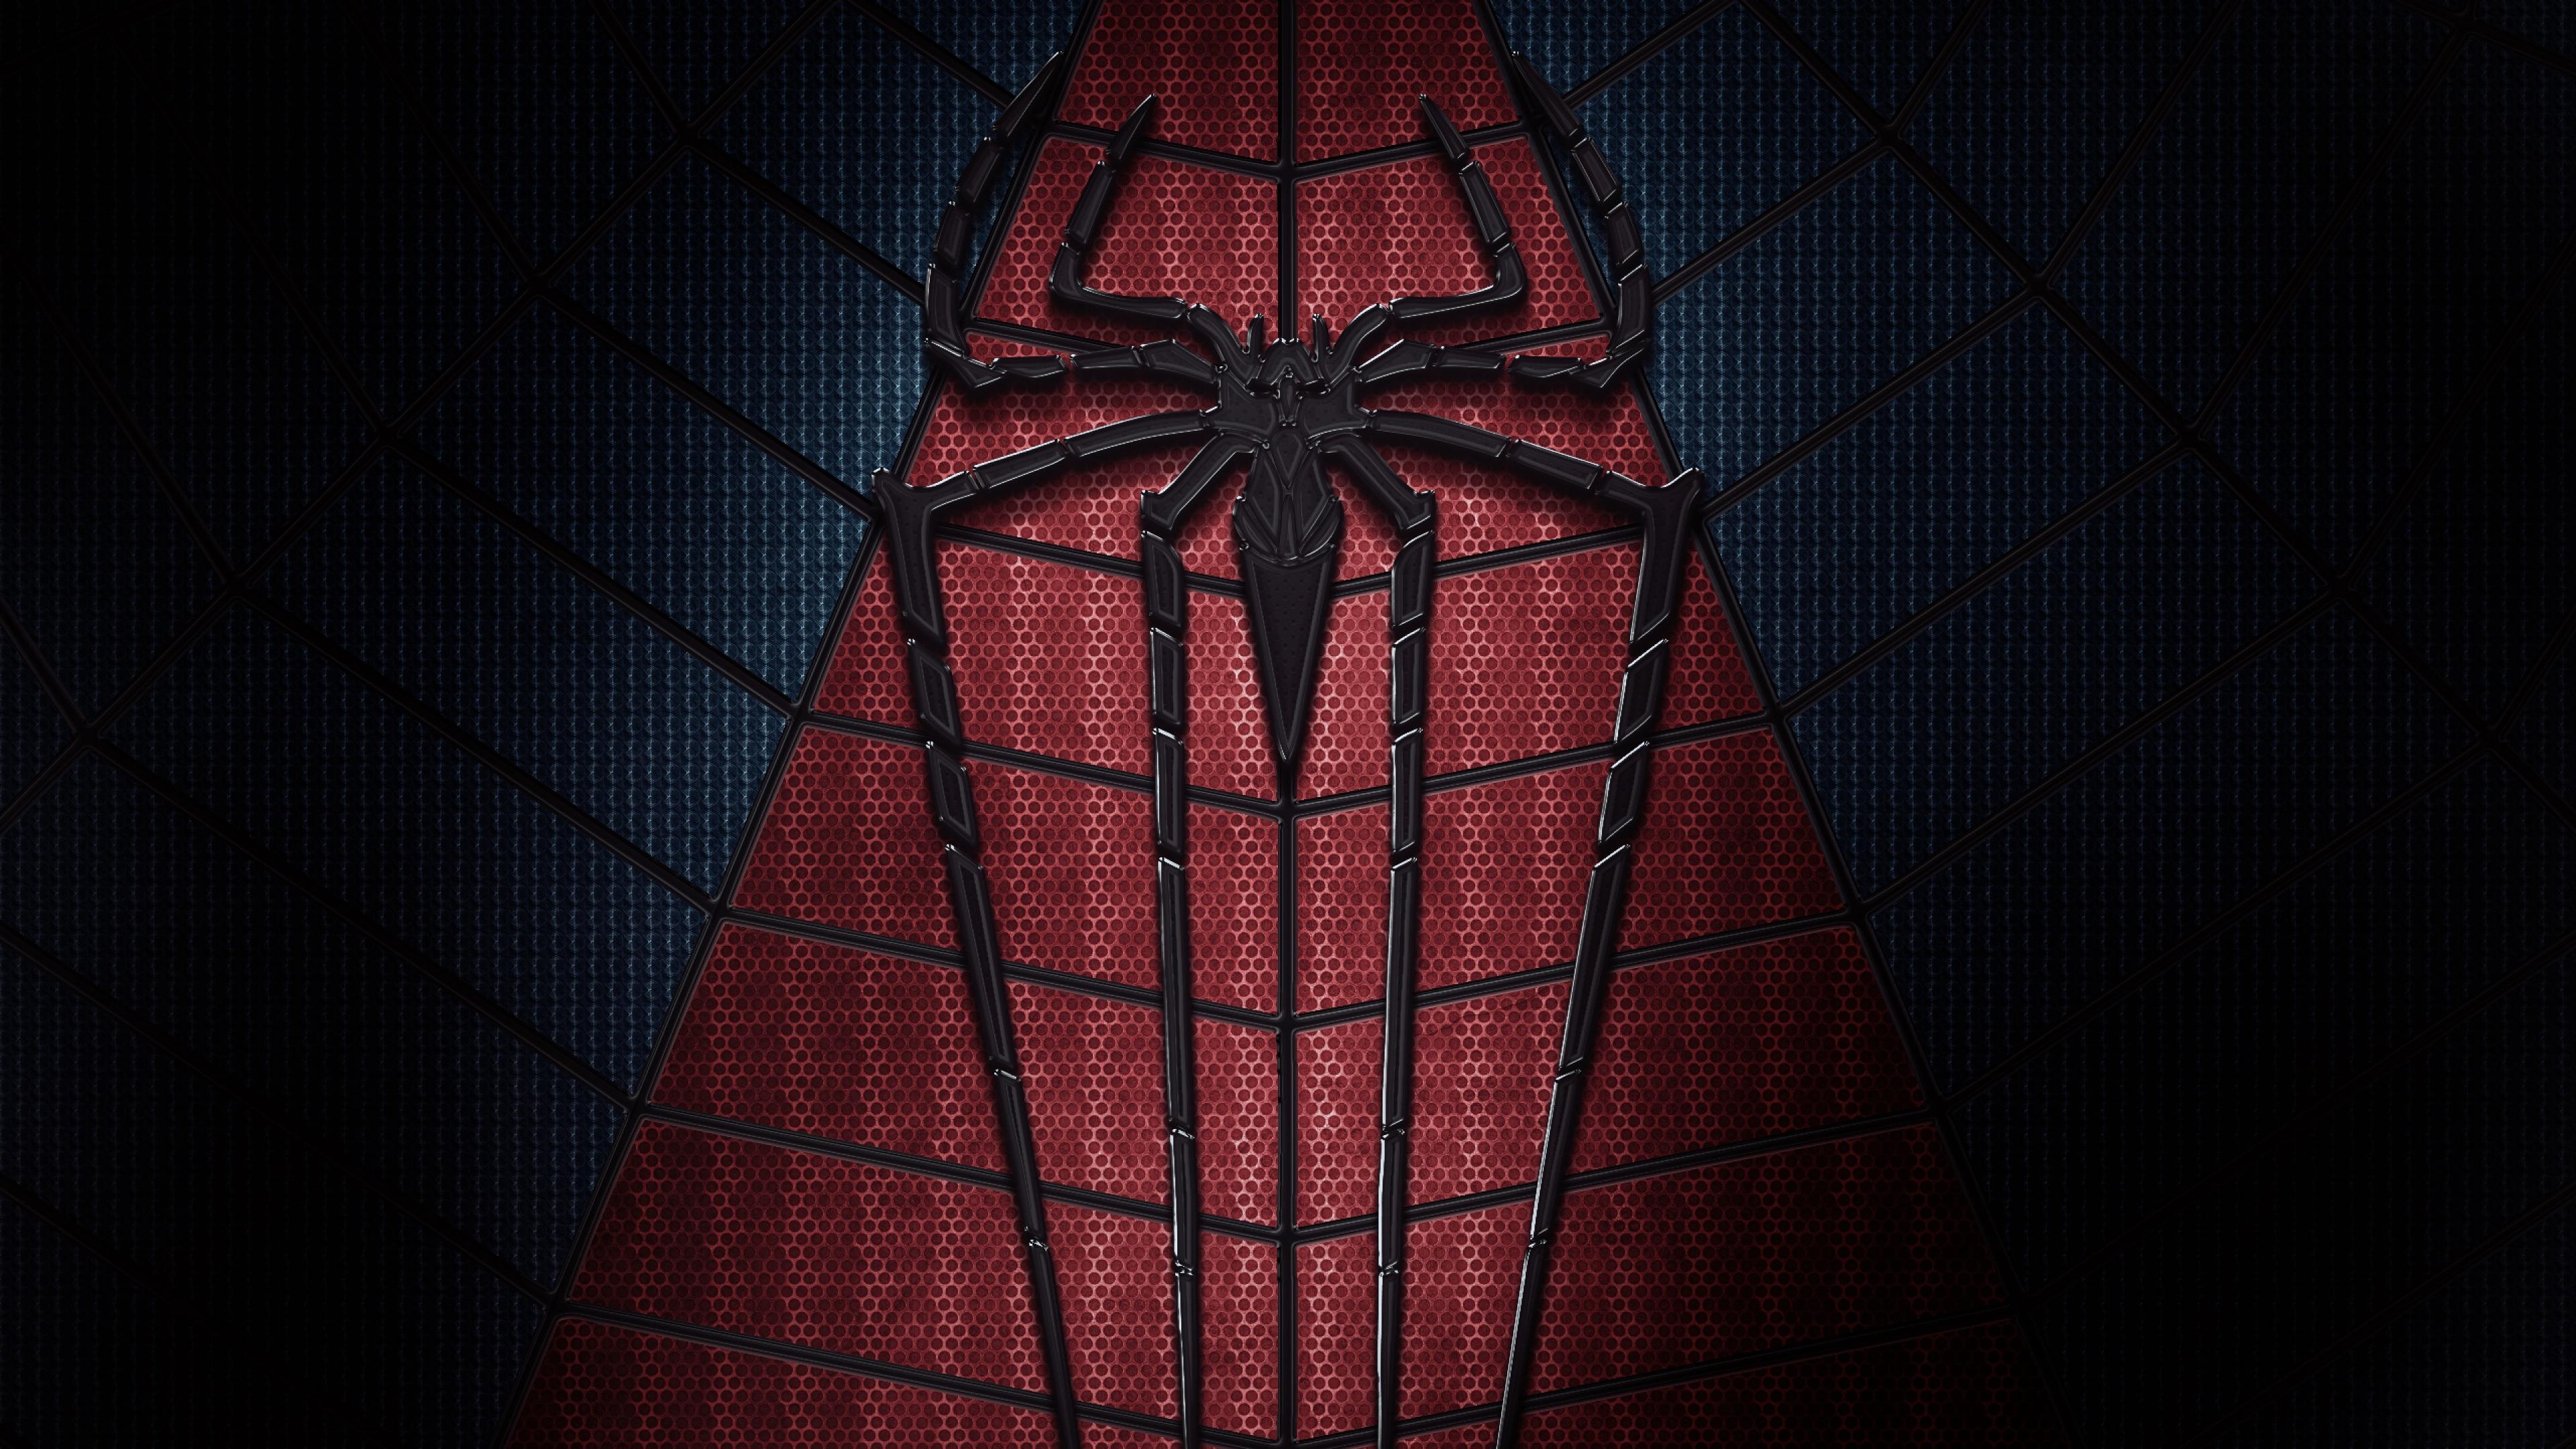 4K Spiderman Wallpaper